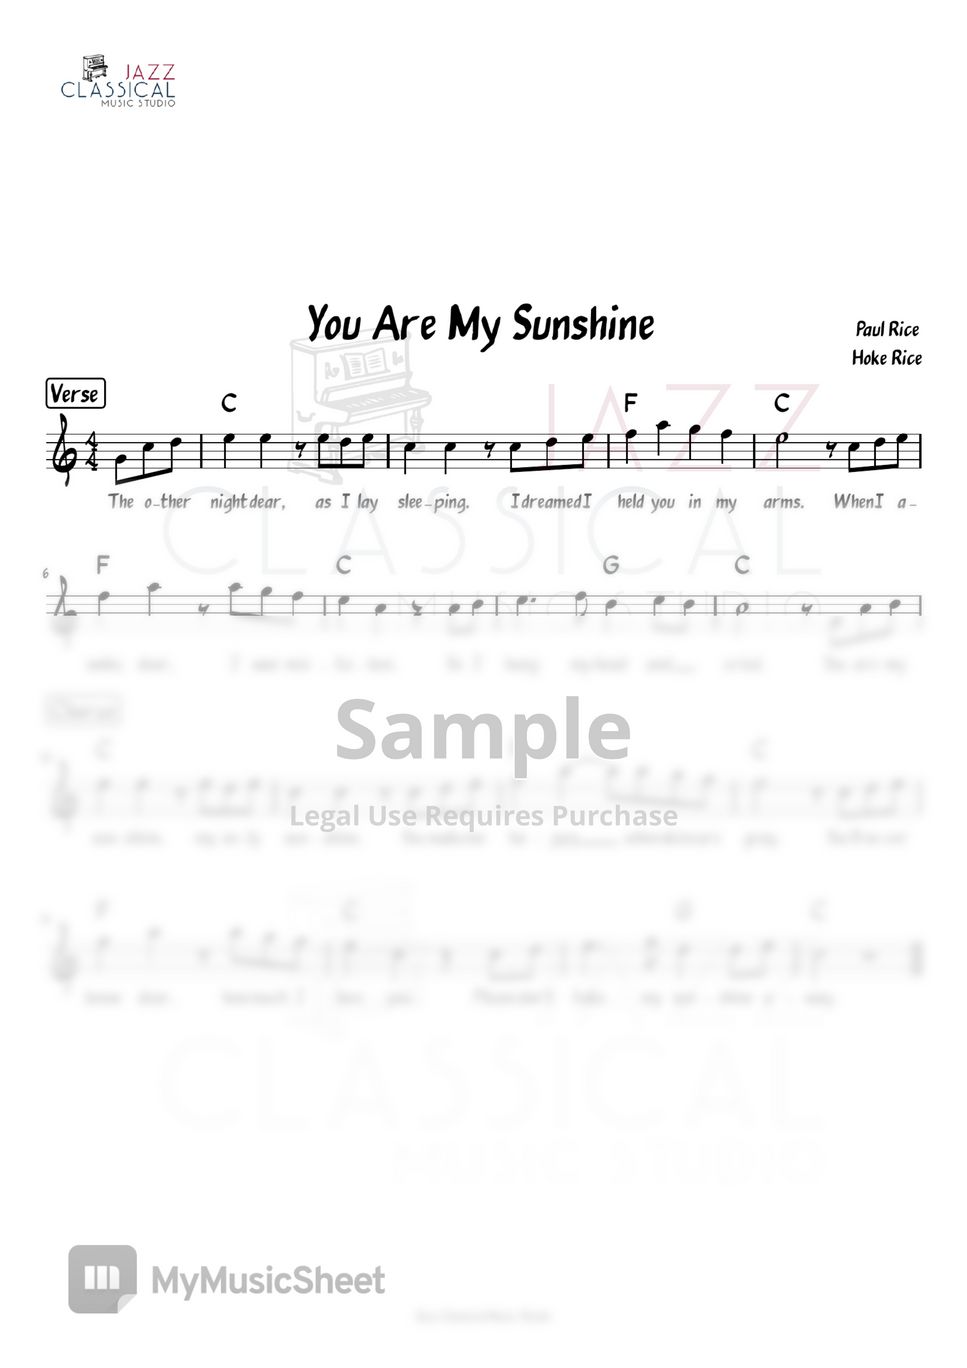 Paul Rice & Hoke Rice - You Are My Sunshine by Jazz Classical Music Studio